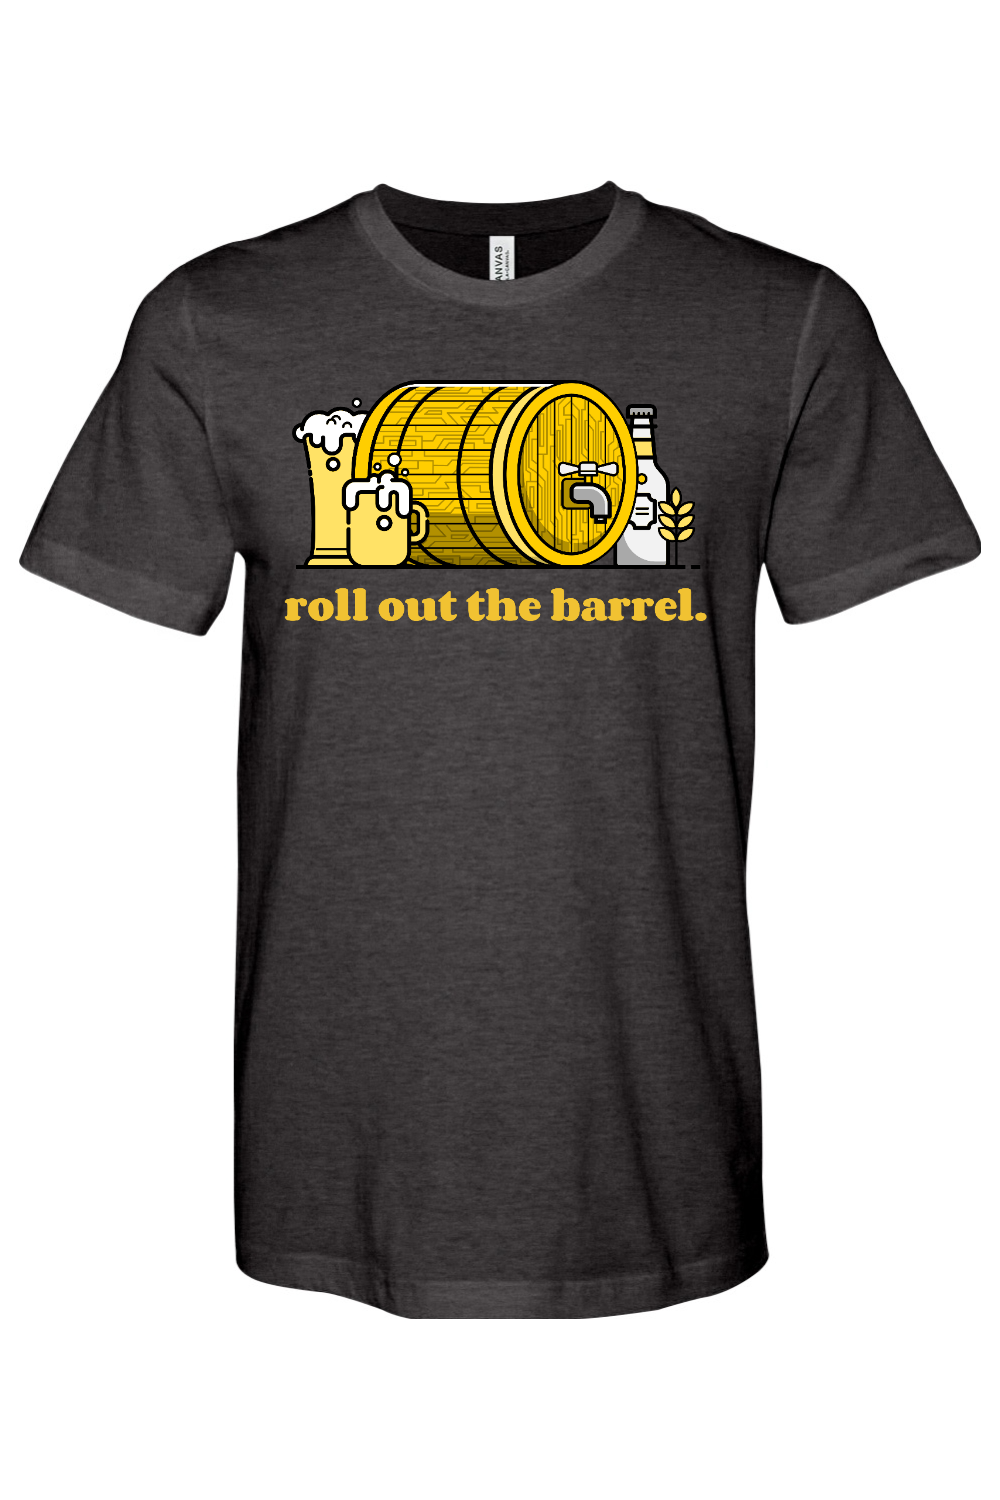 Roll Out The Barrel - Yinzylvania